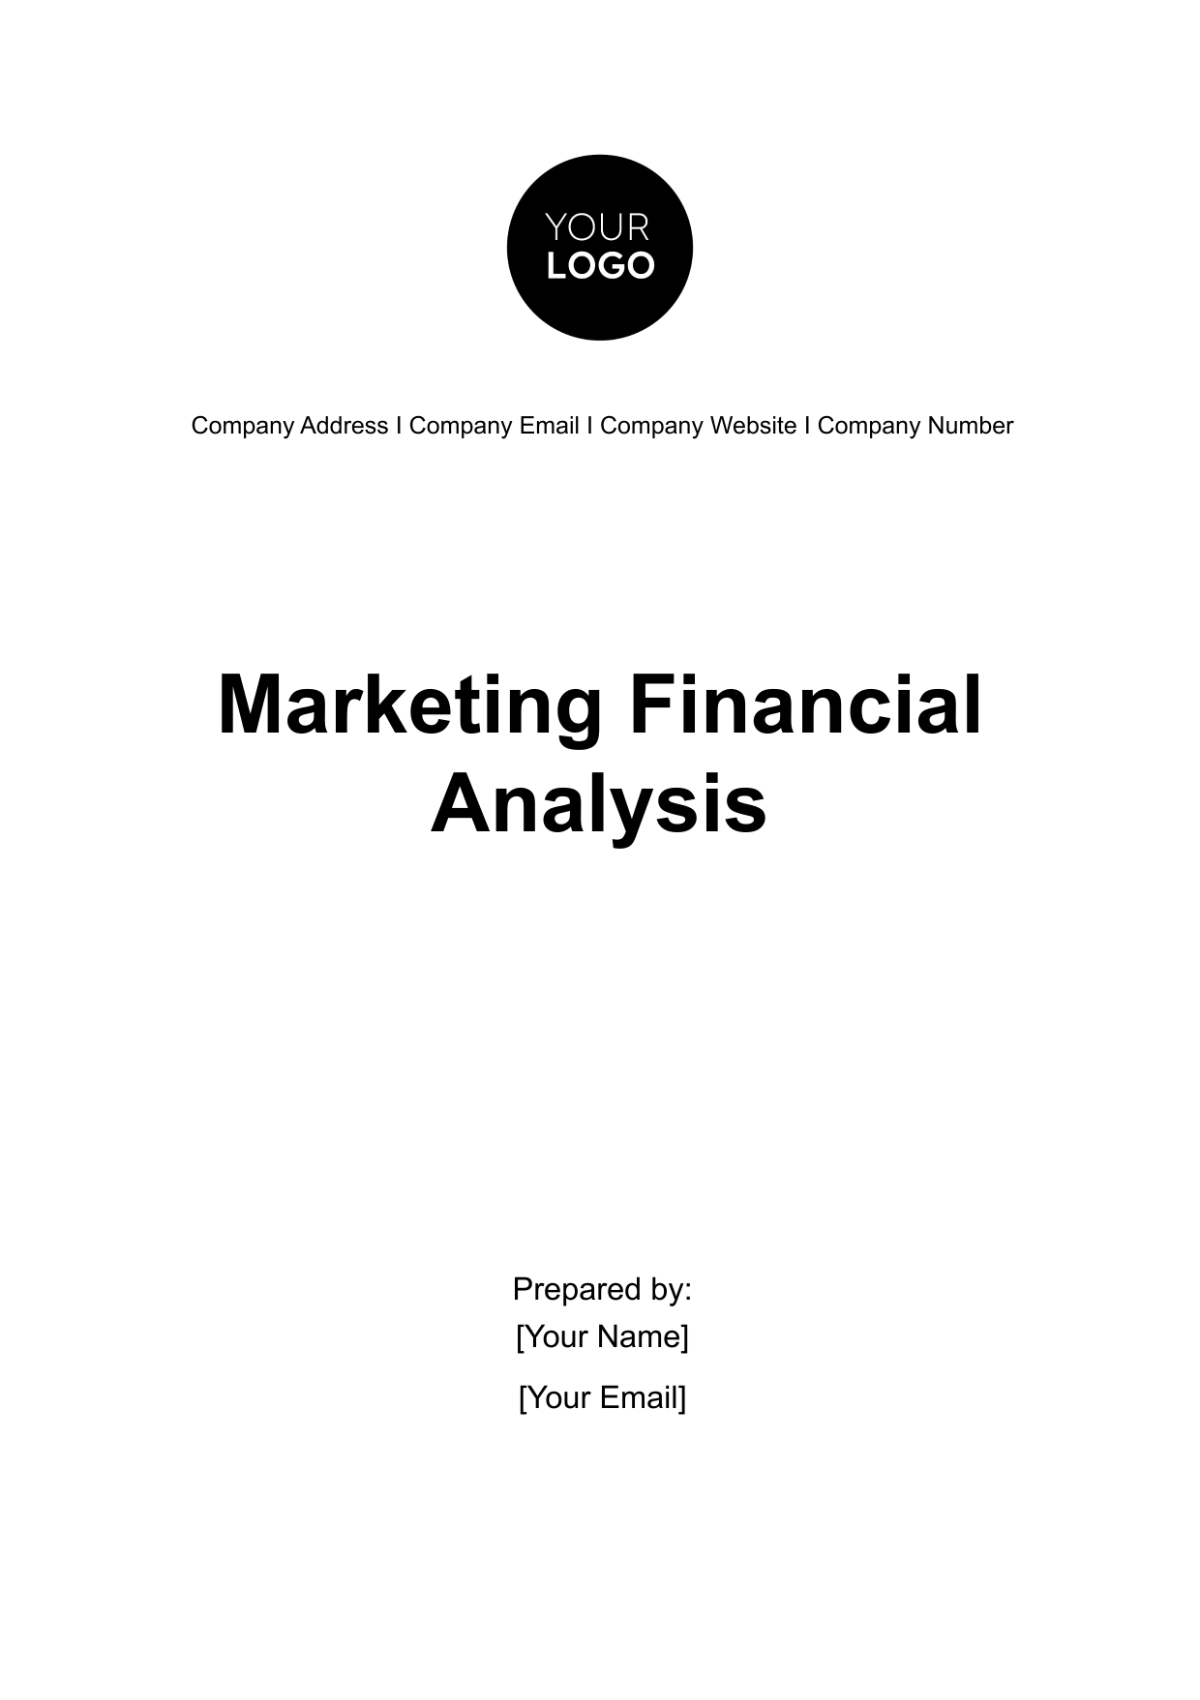 Marketing Financial Analysis Template